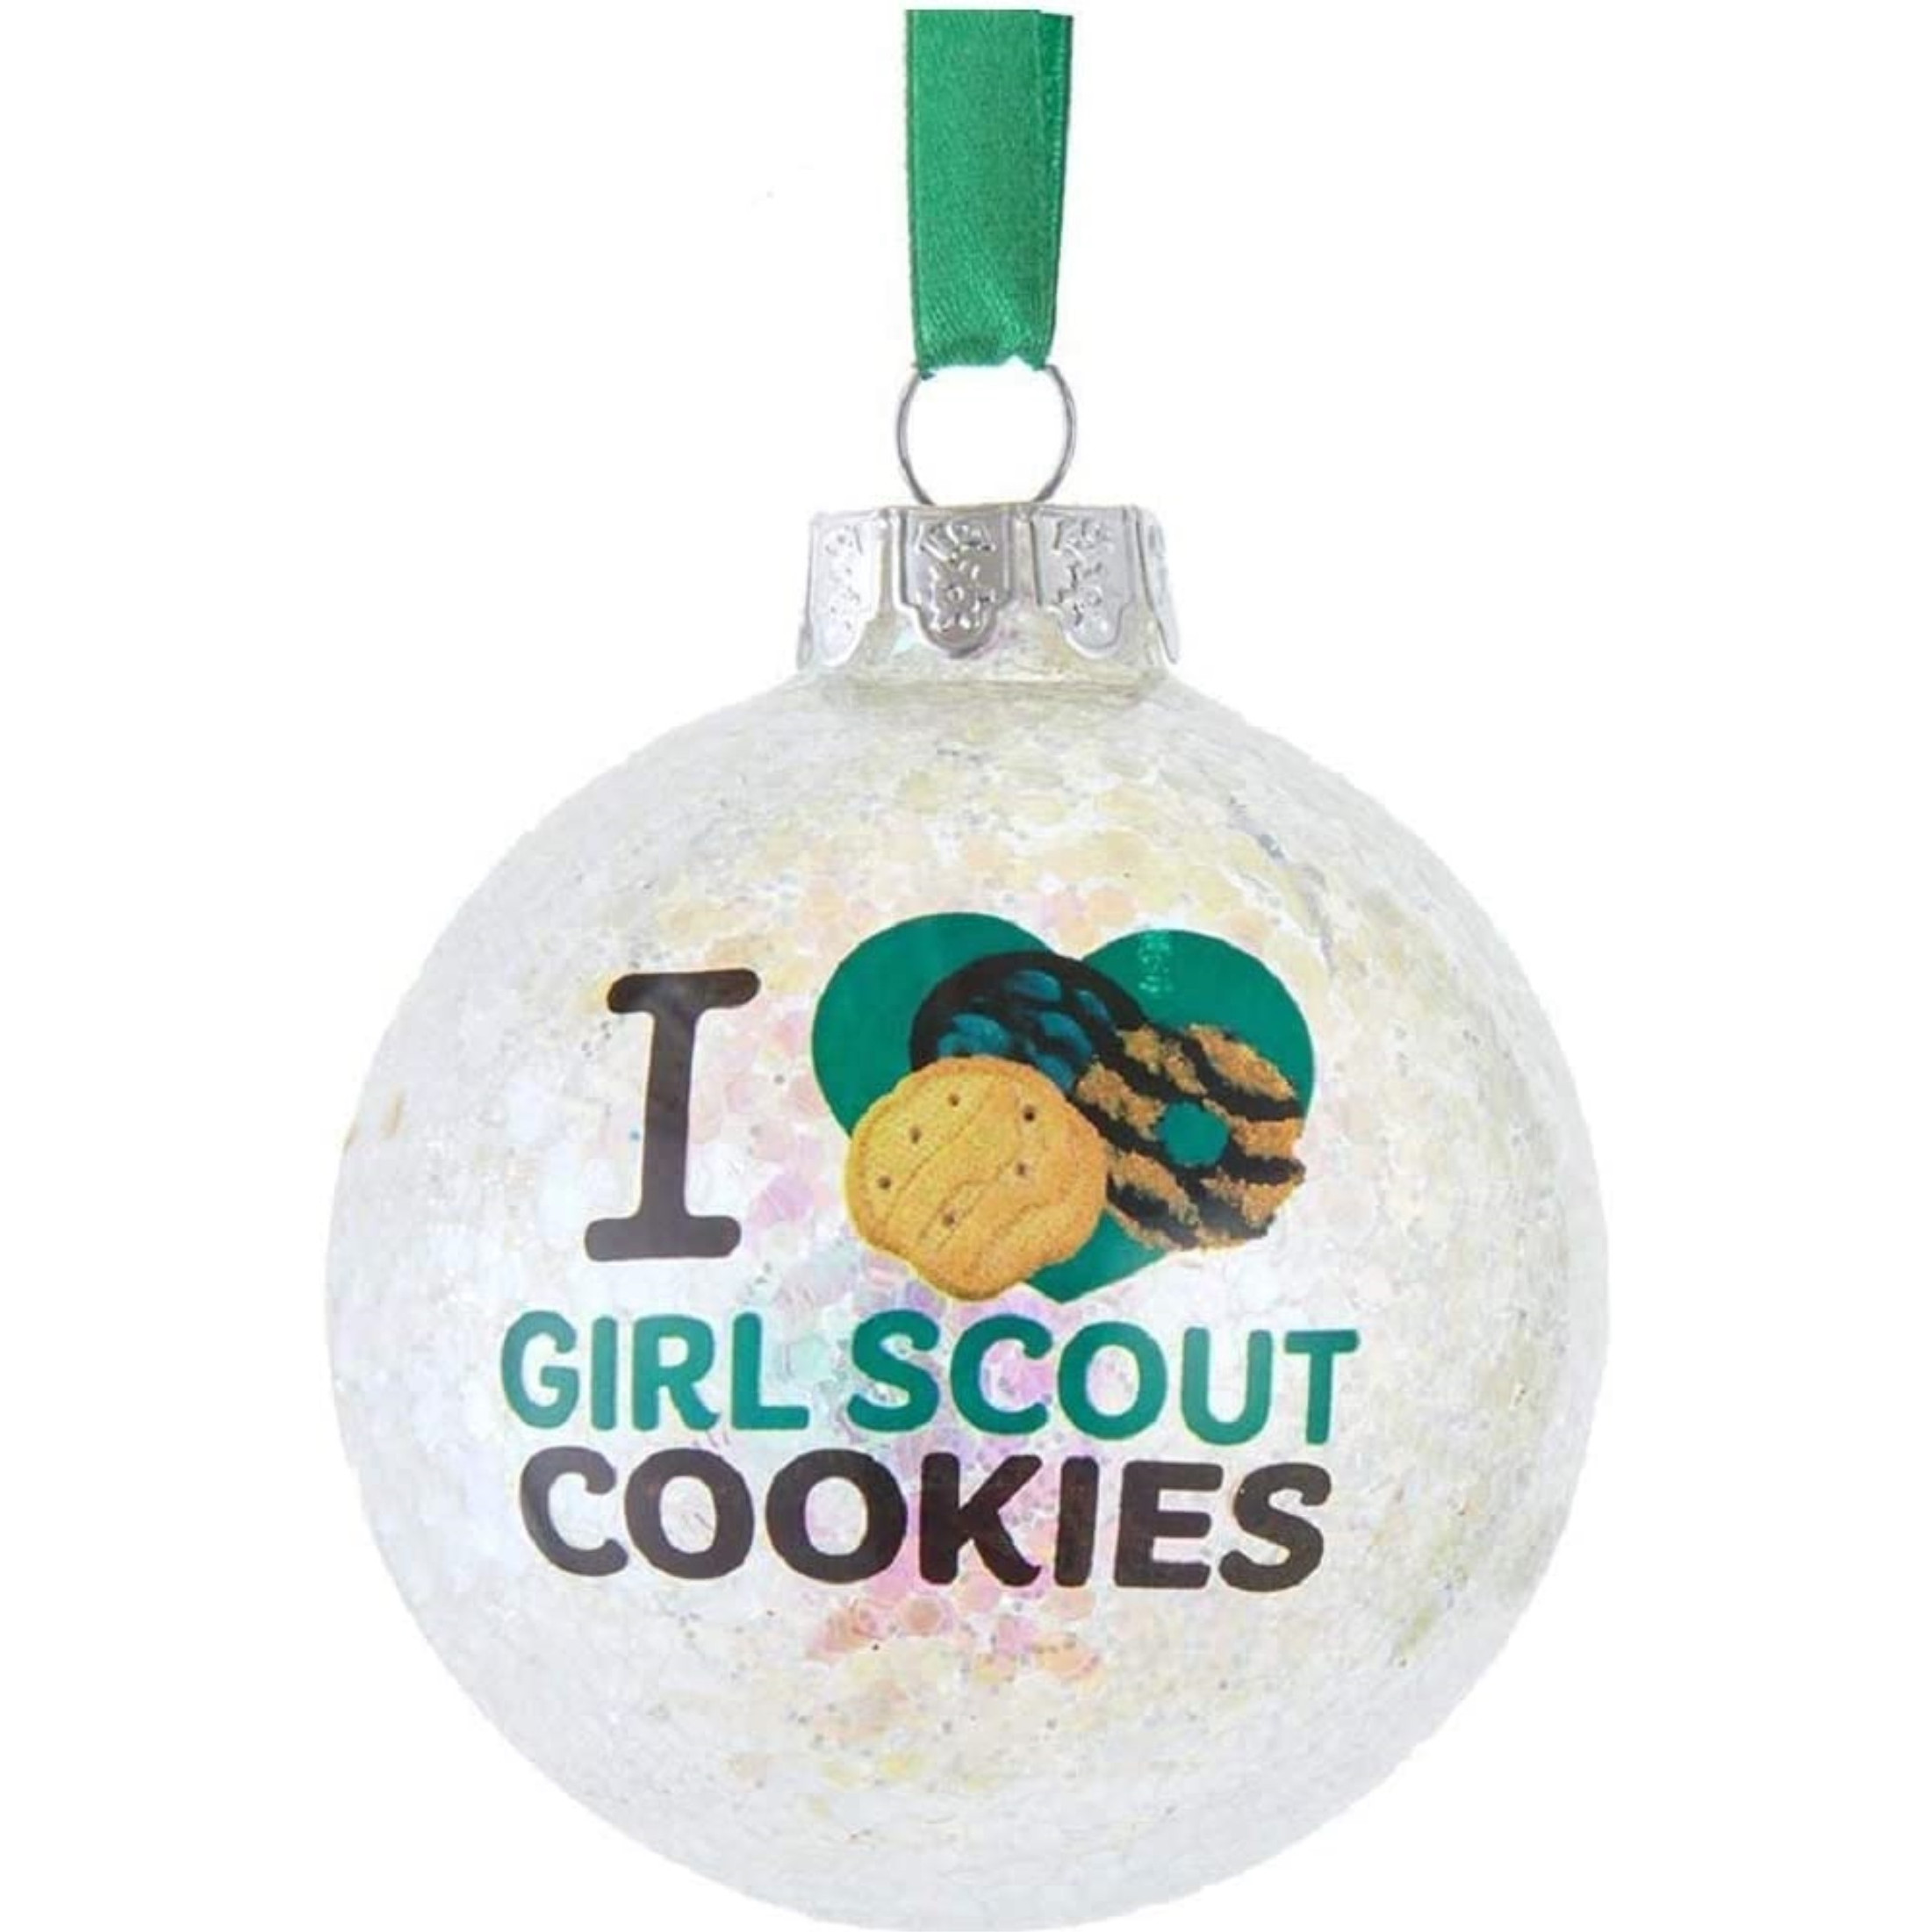 Kurt Adler Ornaments For Christmas Tree, Girl Scouts Cookie Balls, 3" Diameter